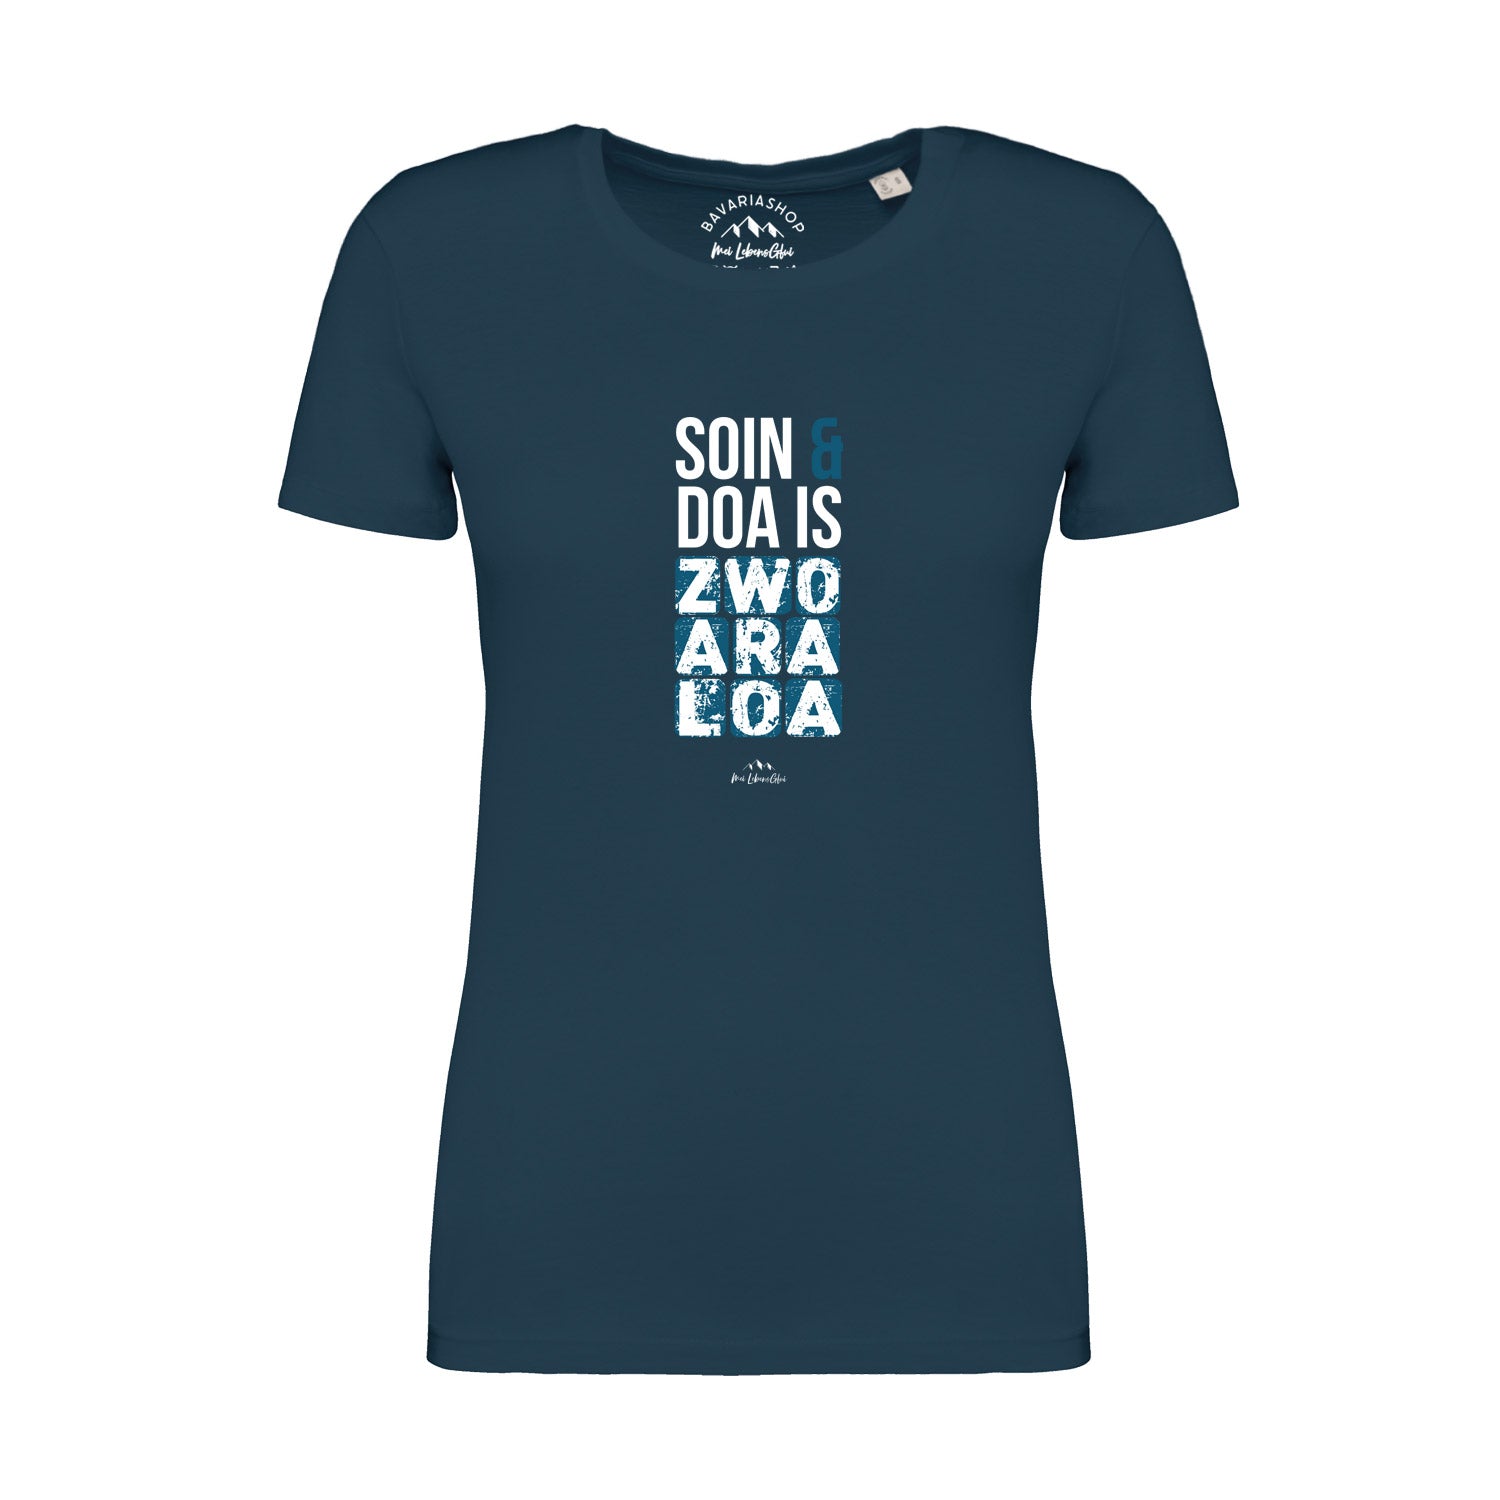 Damen T-Shirt "Soin und doa"